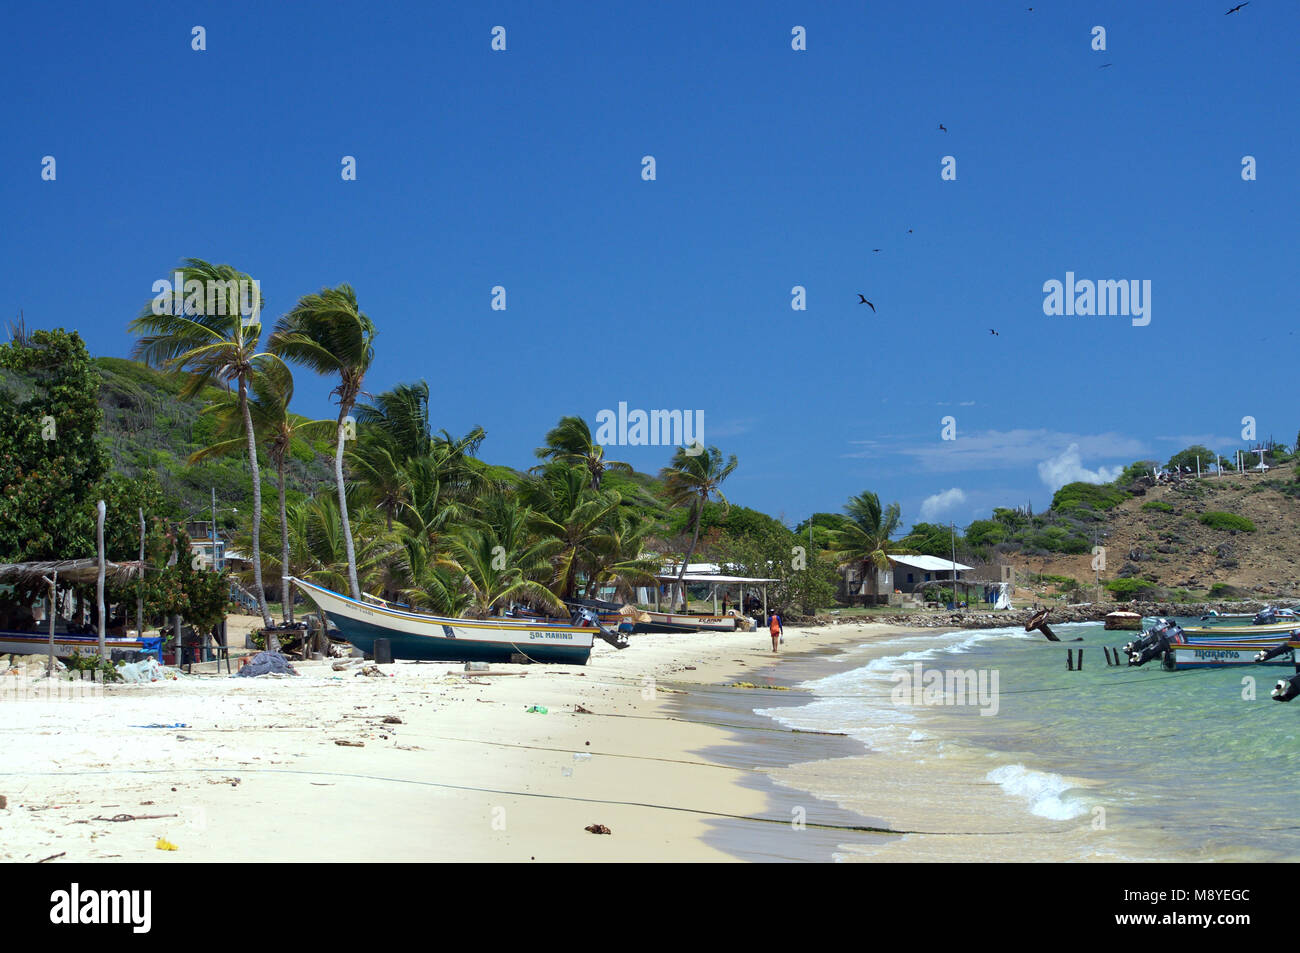 Schönen karibischen Inseln, Inselgruppe Los Testigos, Mar Caribe, Venezuela Stockfoto